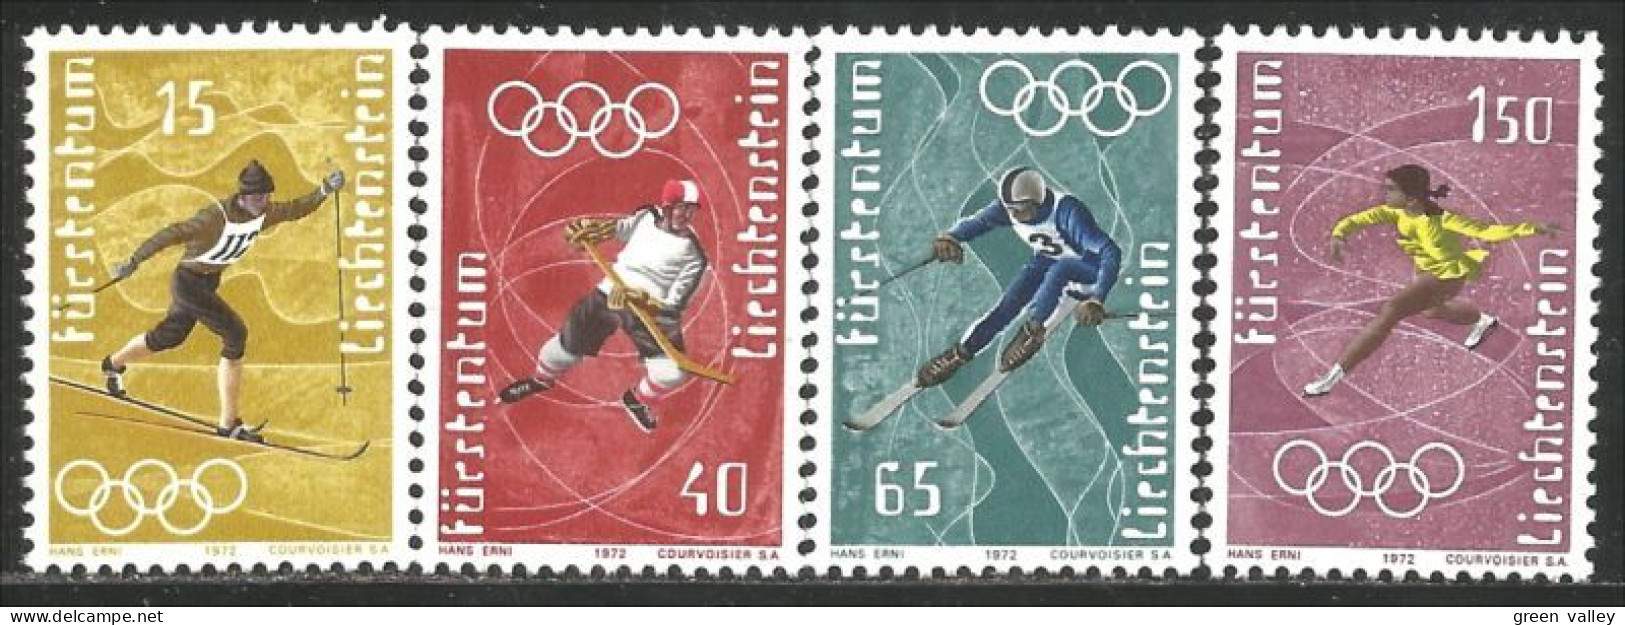 574 Liechtenstein Olympic Sapporo 1972 Ski Patinage Skating Hockey MNH ** Neuf SC (LIE-72d) - Eiskunstlauf